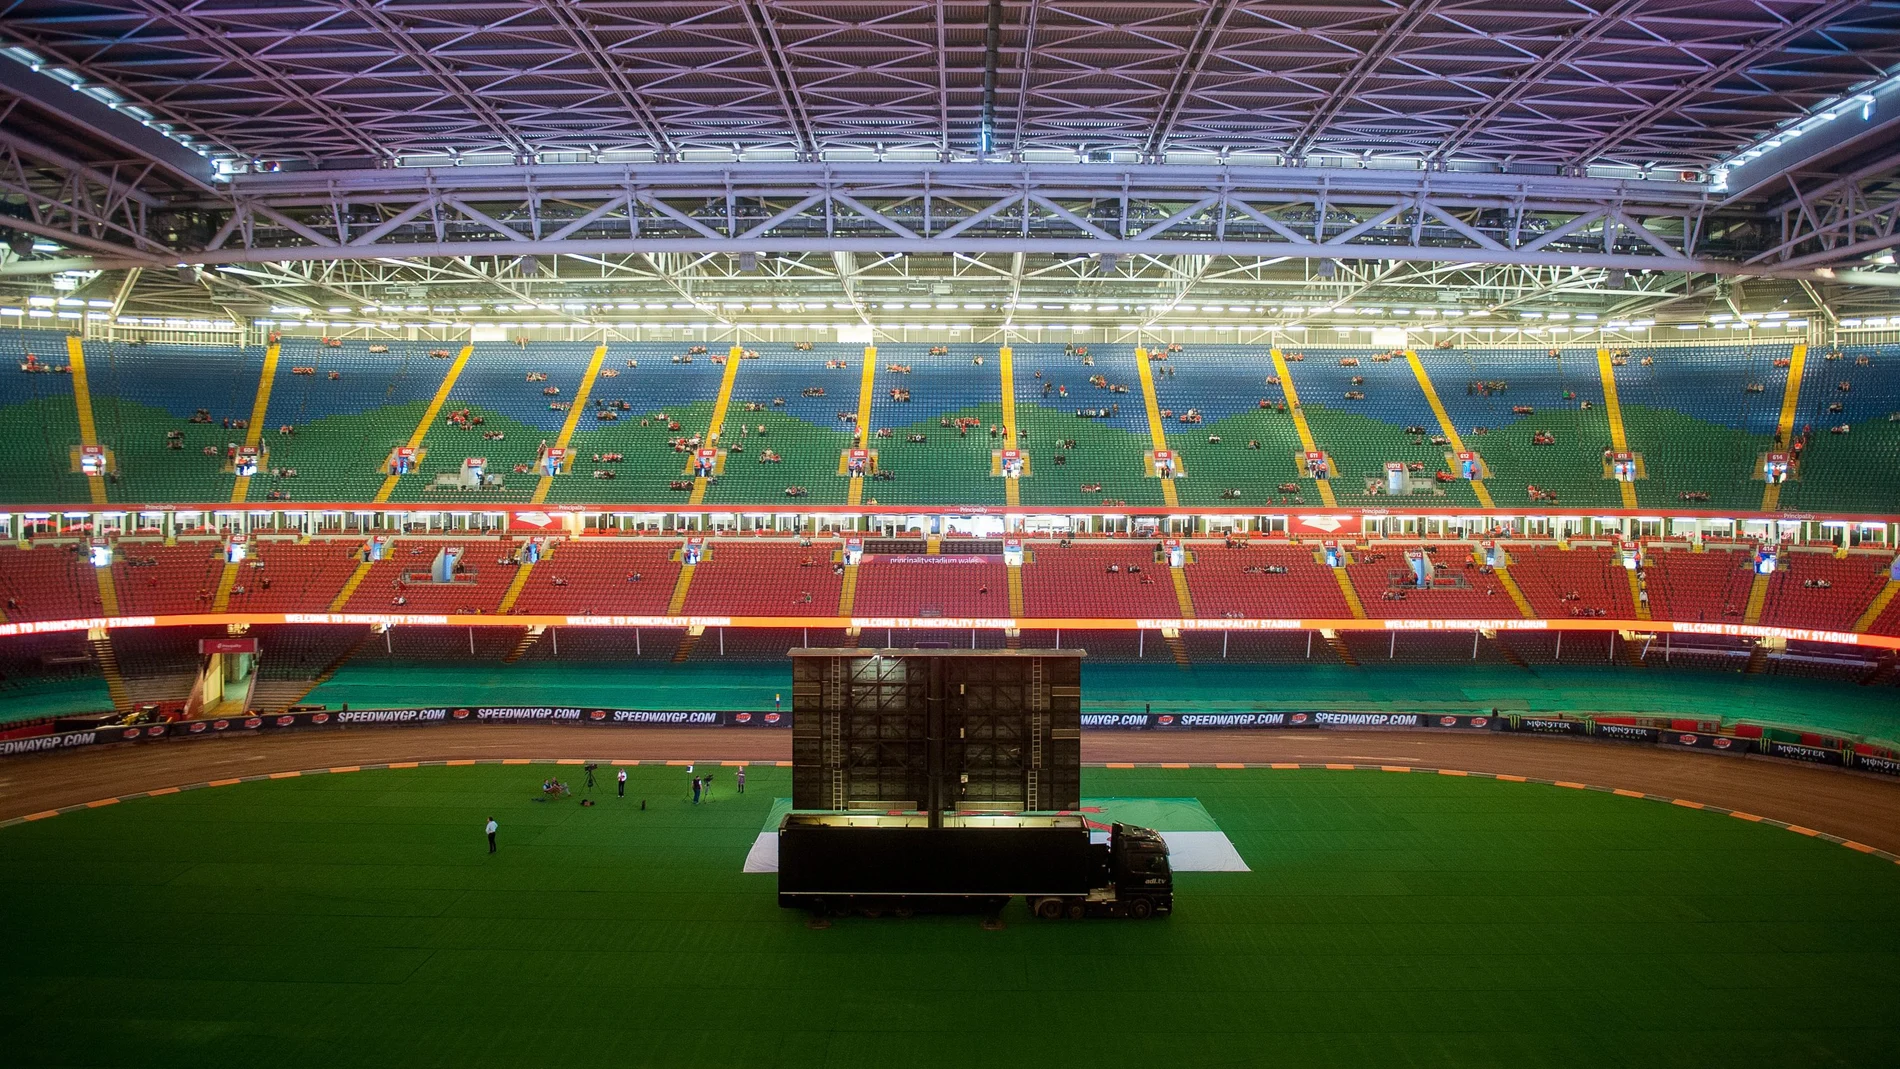 Vista general del estadio de Cardiff donde se disputa la final